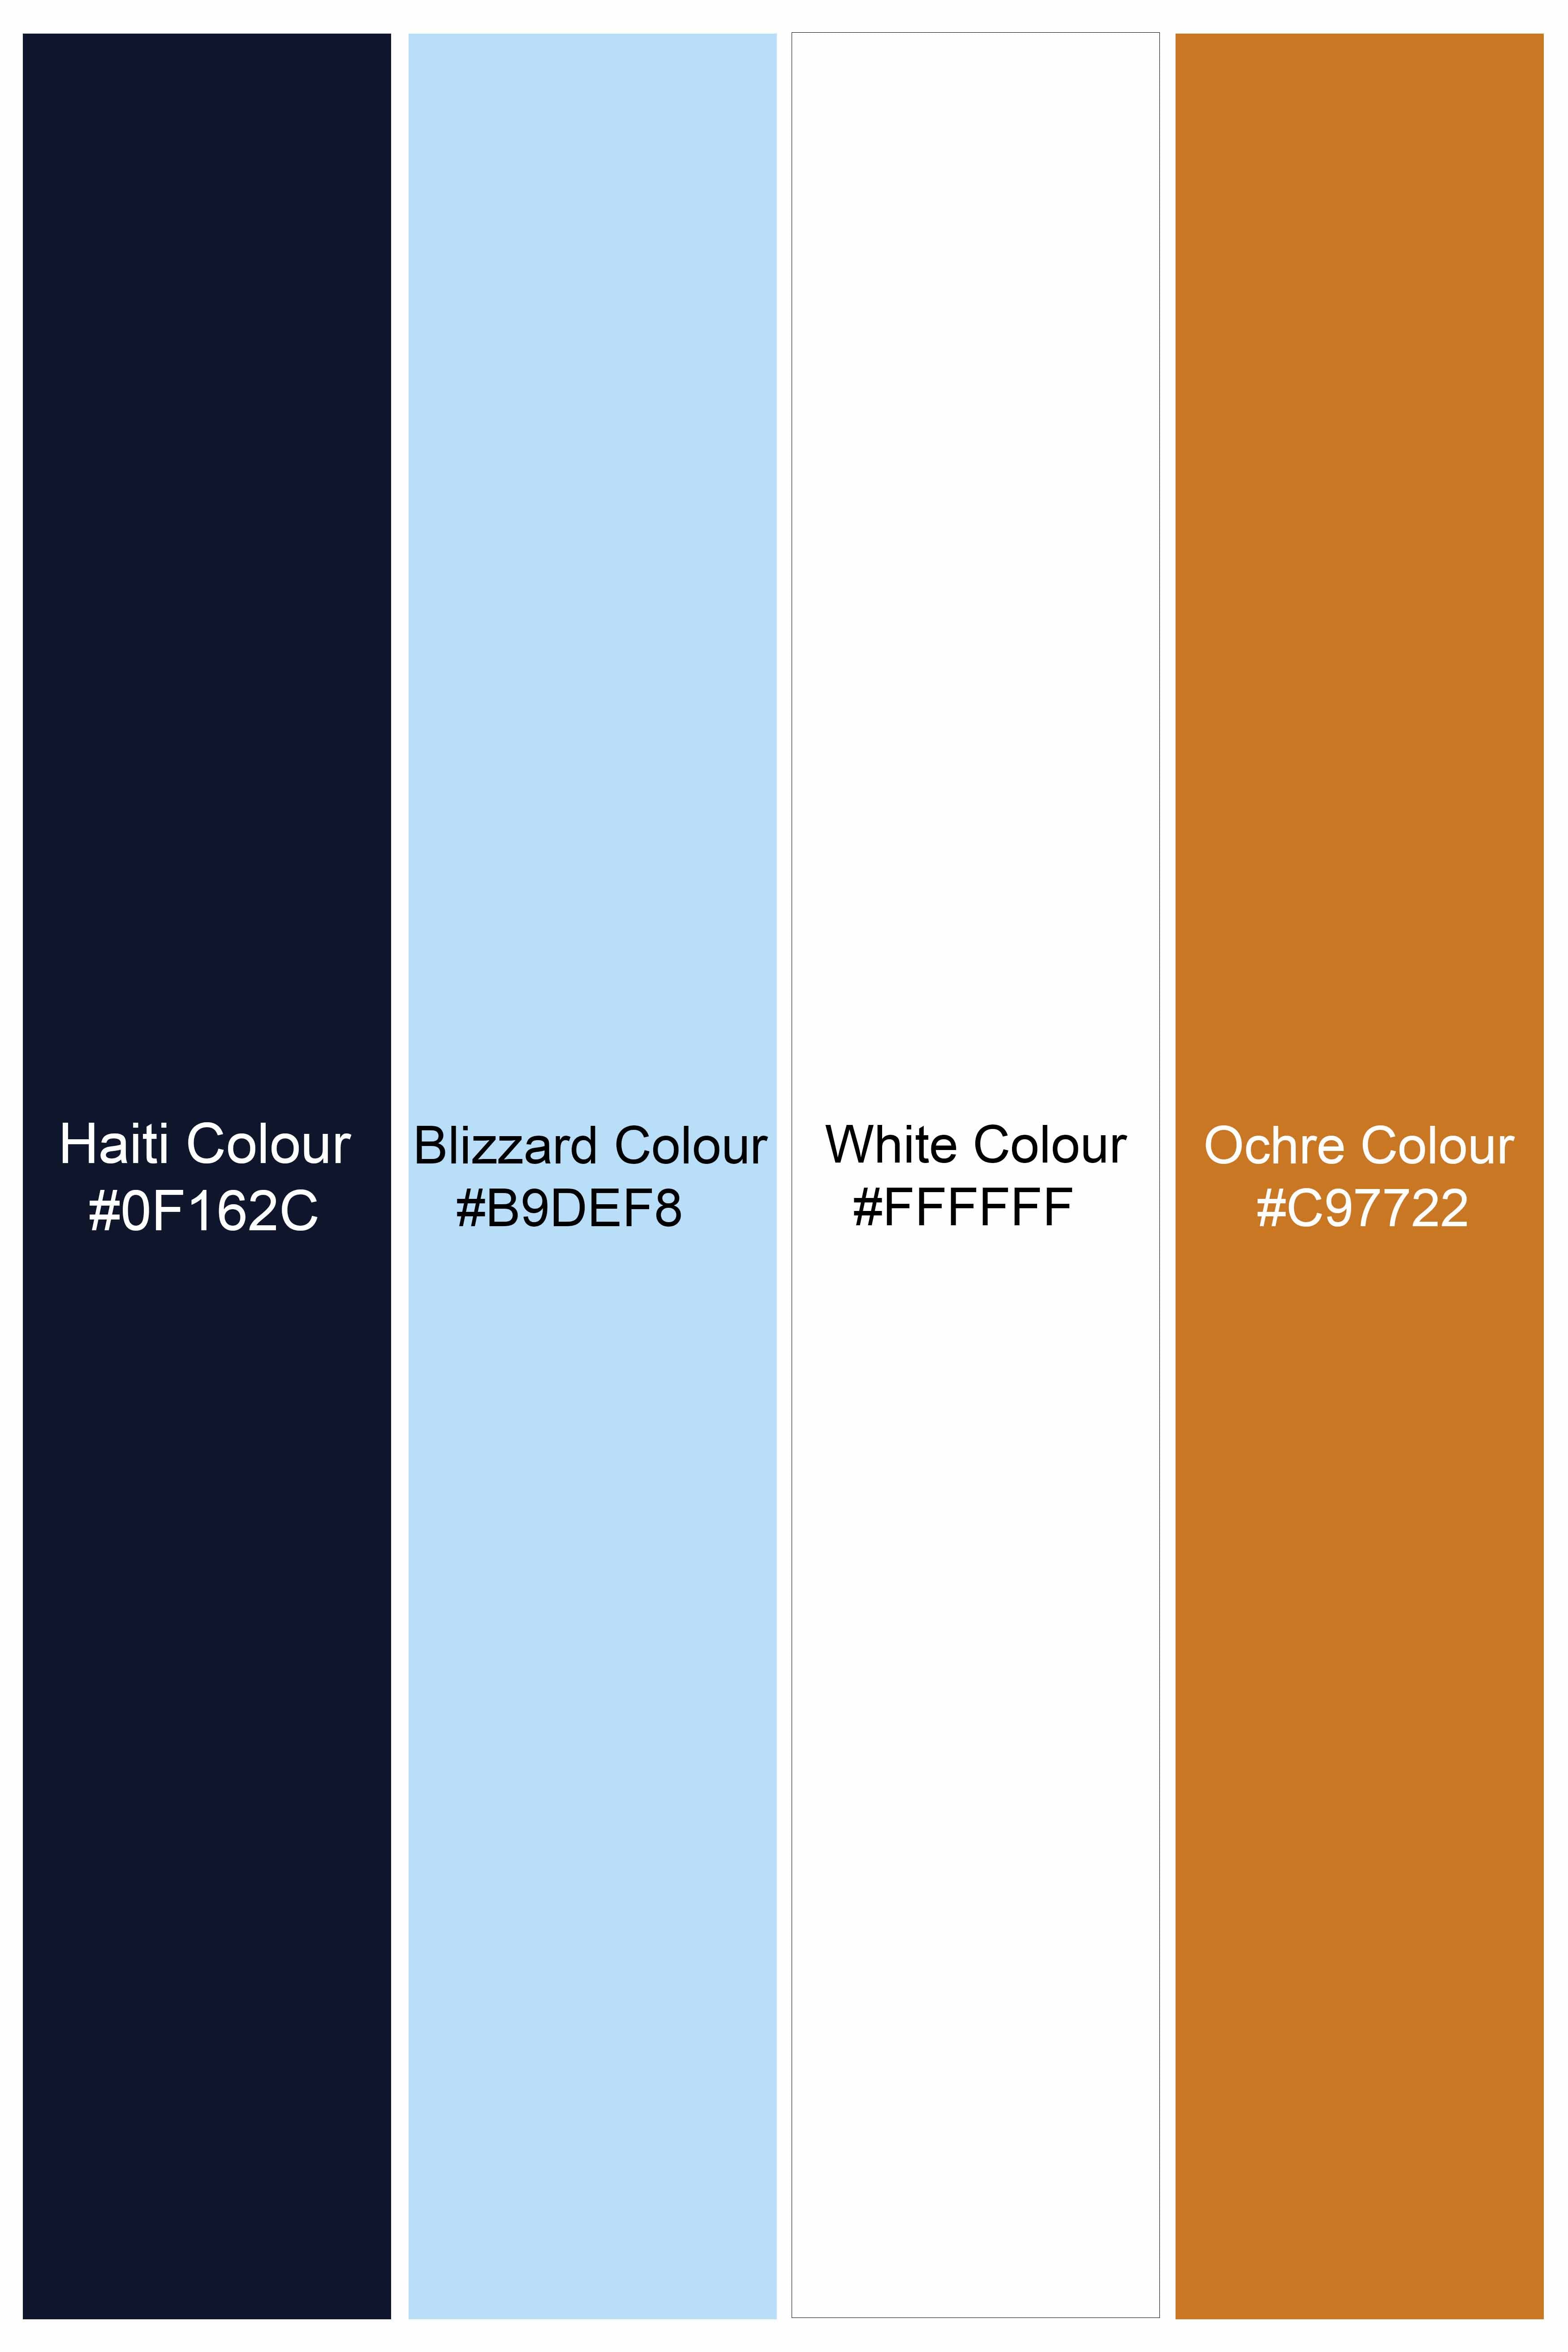 Haiti Blue and Ochre Orange Floral Printed Subtle Sheen Super Soft Premium Cotton Designer Shirt 11477-38, 11477-H-38, 11477-39, 11477-H-39, 11477-40, 11477-H-40, 11477-42, 11477-H-42, 11477-44, 11477-H-44, 11477-46, 11477-H-46, 11477-48, 11477-H-48, 11477-50, 11477-H-50, 11477-52, 11477-H-52